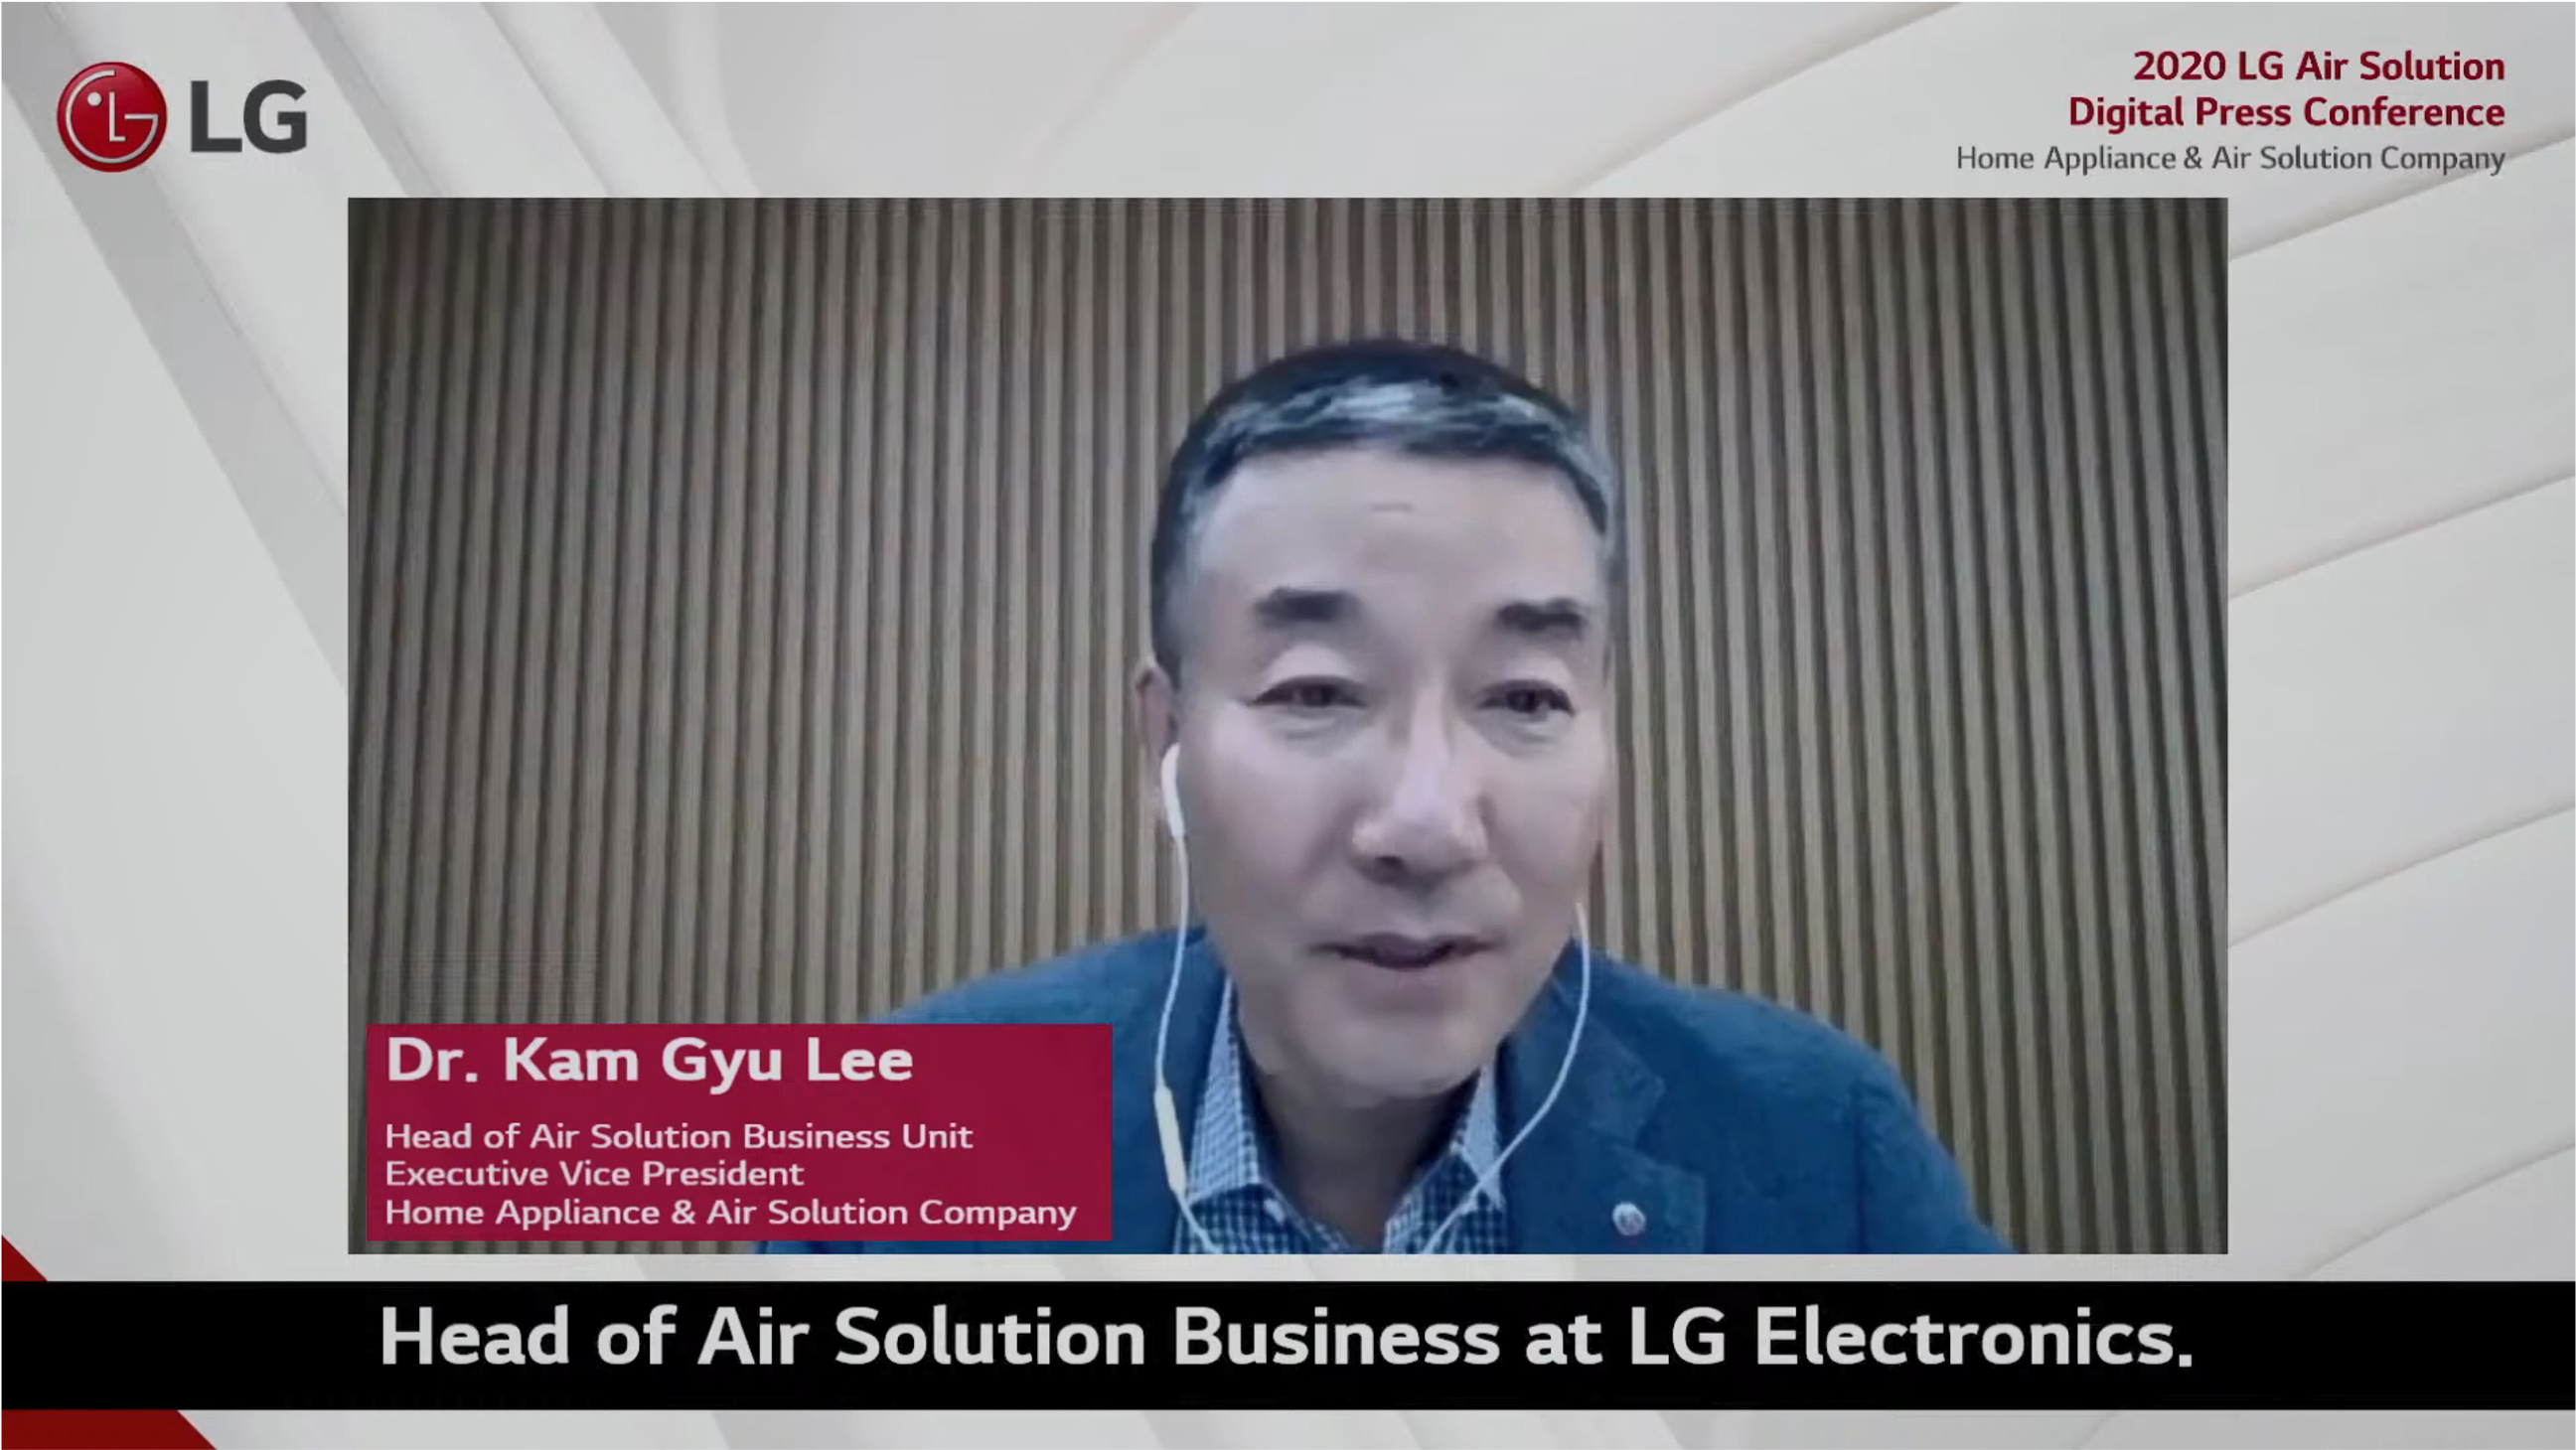 2020-LG-AirSolution-DigitalPressConference-중계현장-LED스크린-웨비나